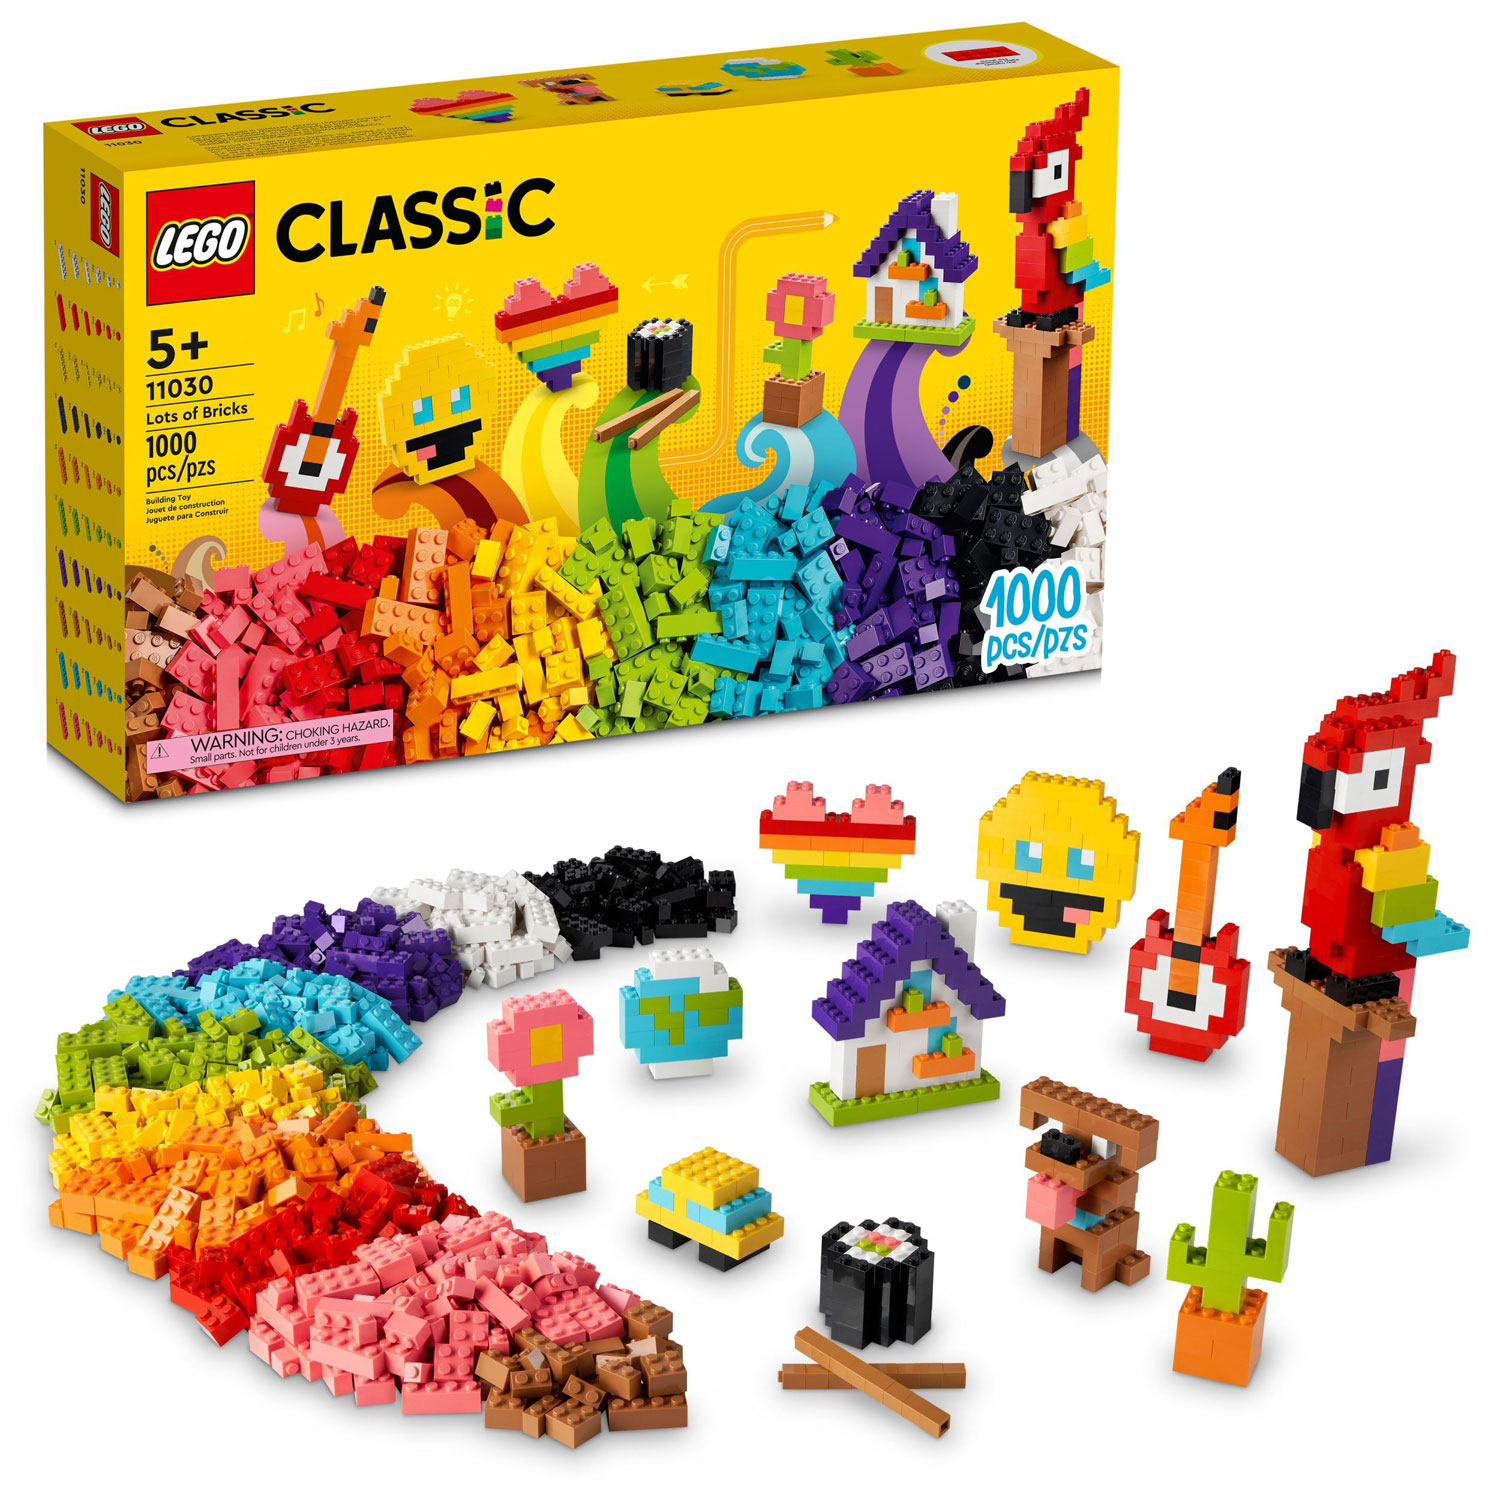 LEGO Classic: Lots of Bricks - 1000 Pieces (11030)